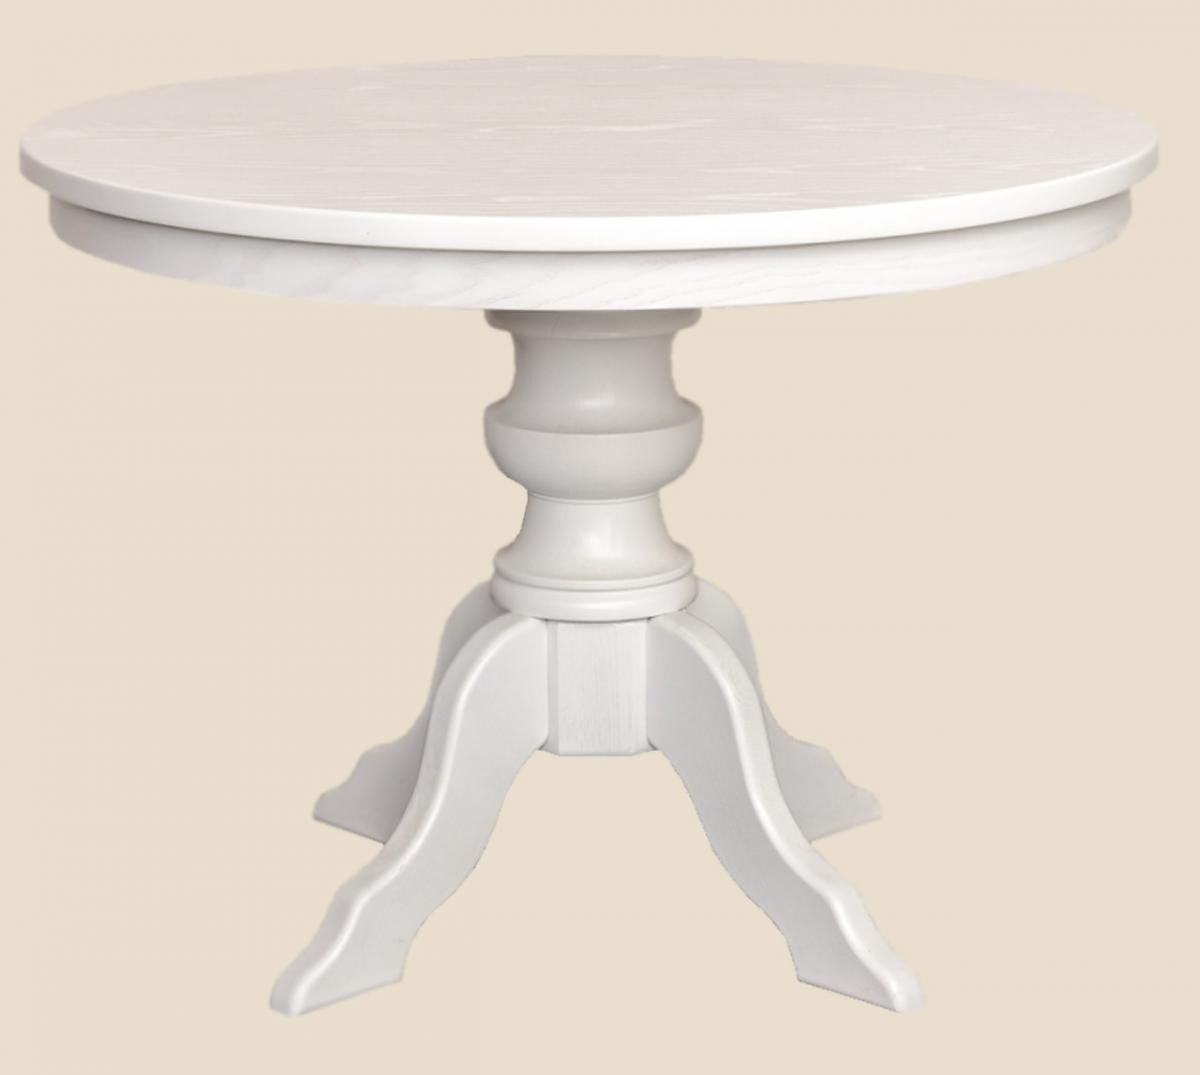 Table "Rondo" round